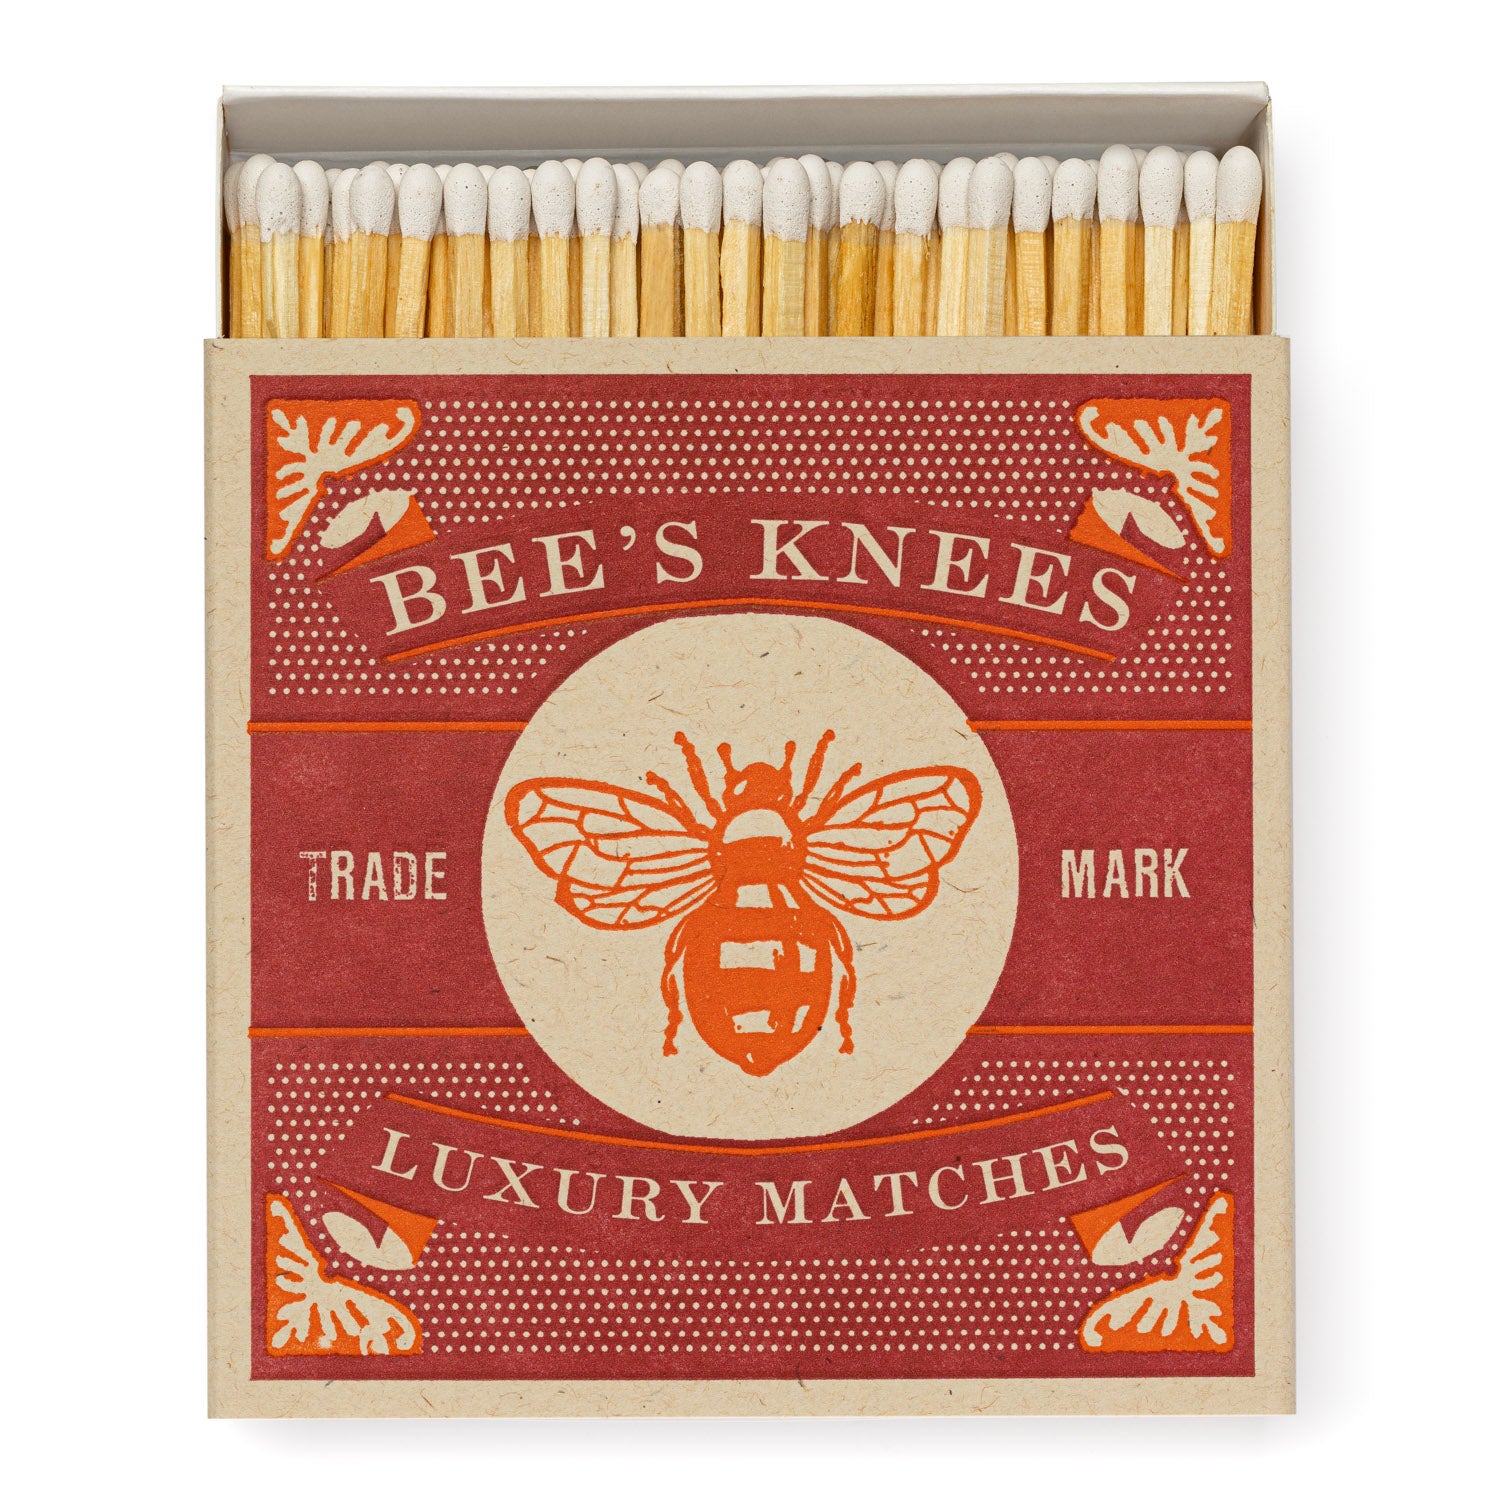 Archivist Gallery Bee's Knees Luxury Matches